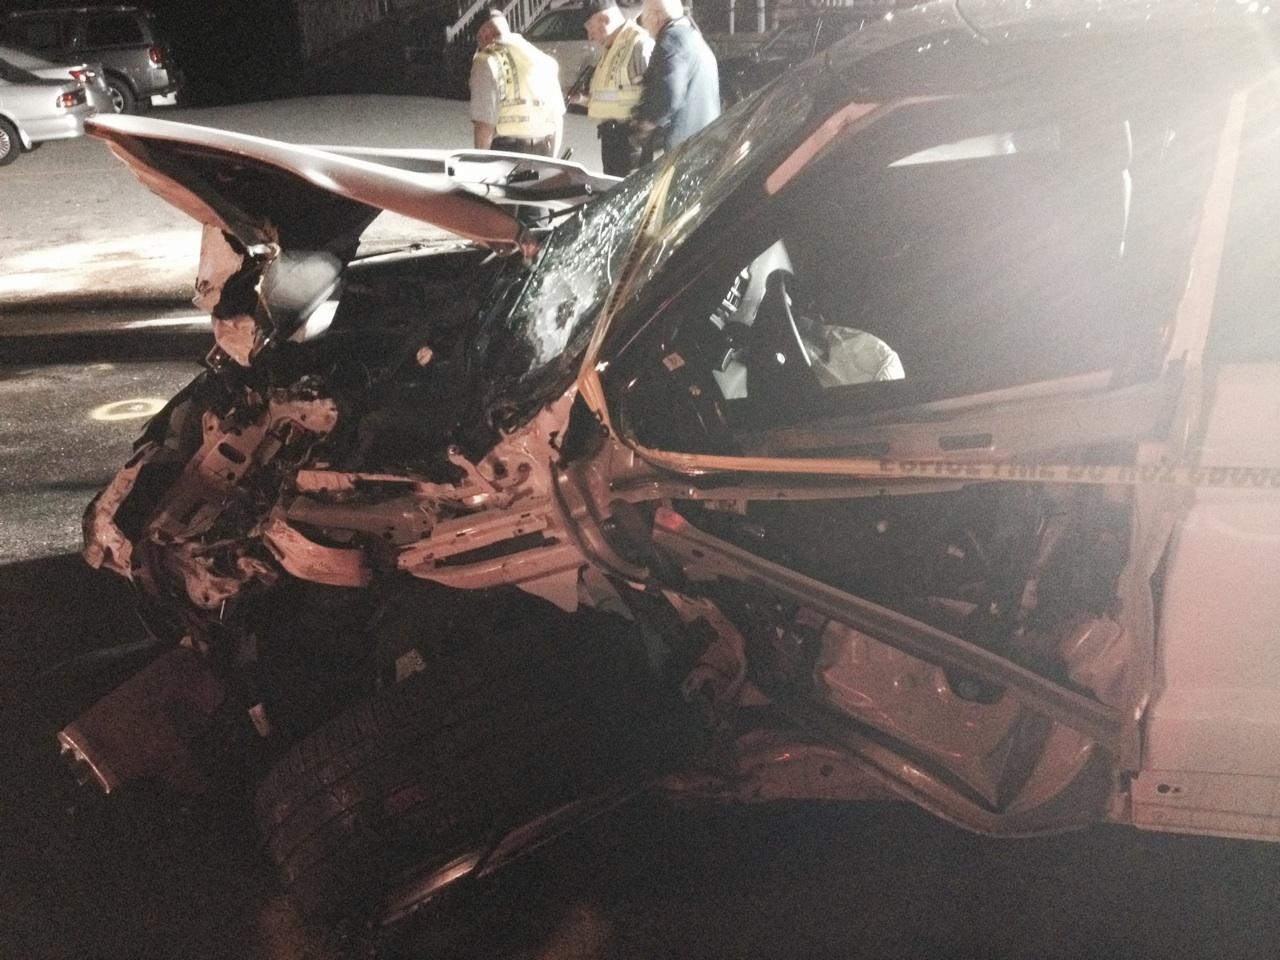 Lowell Officer Kills Man in Drunk Driving Crash 